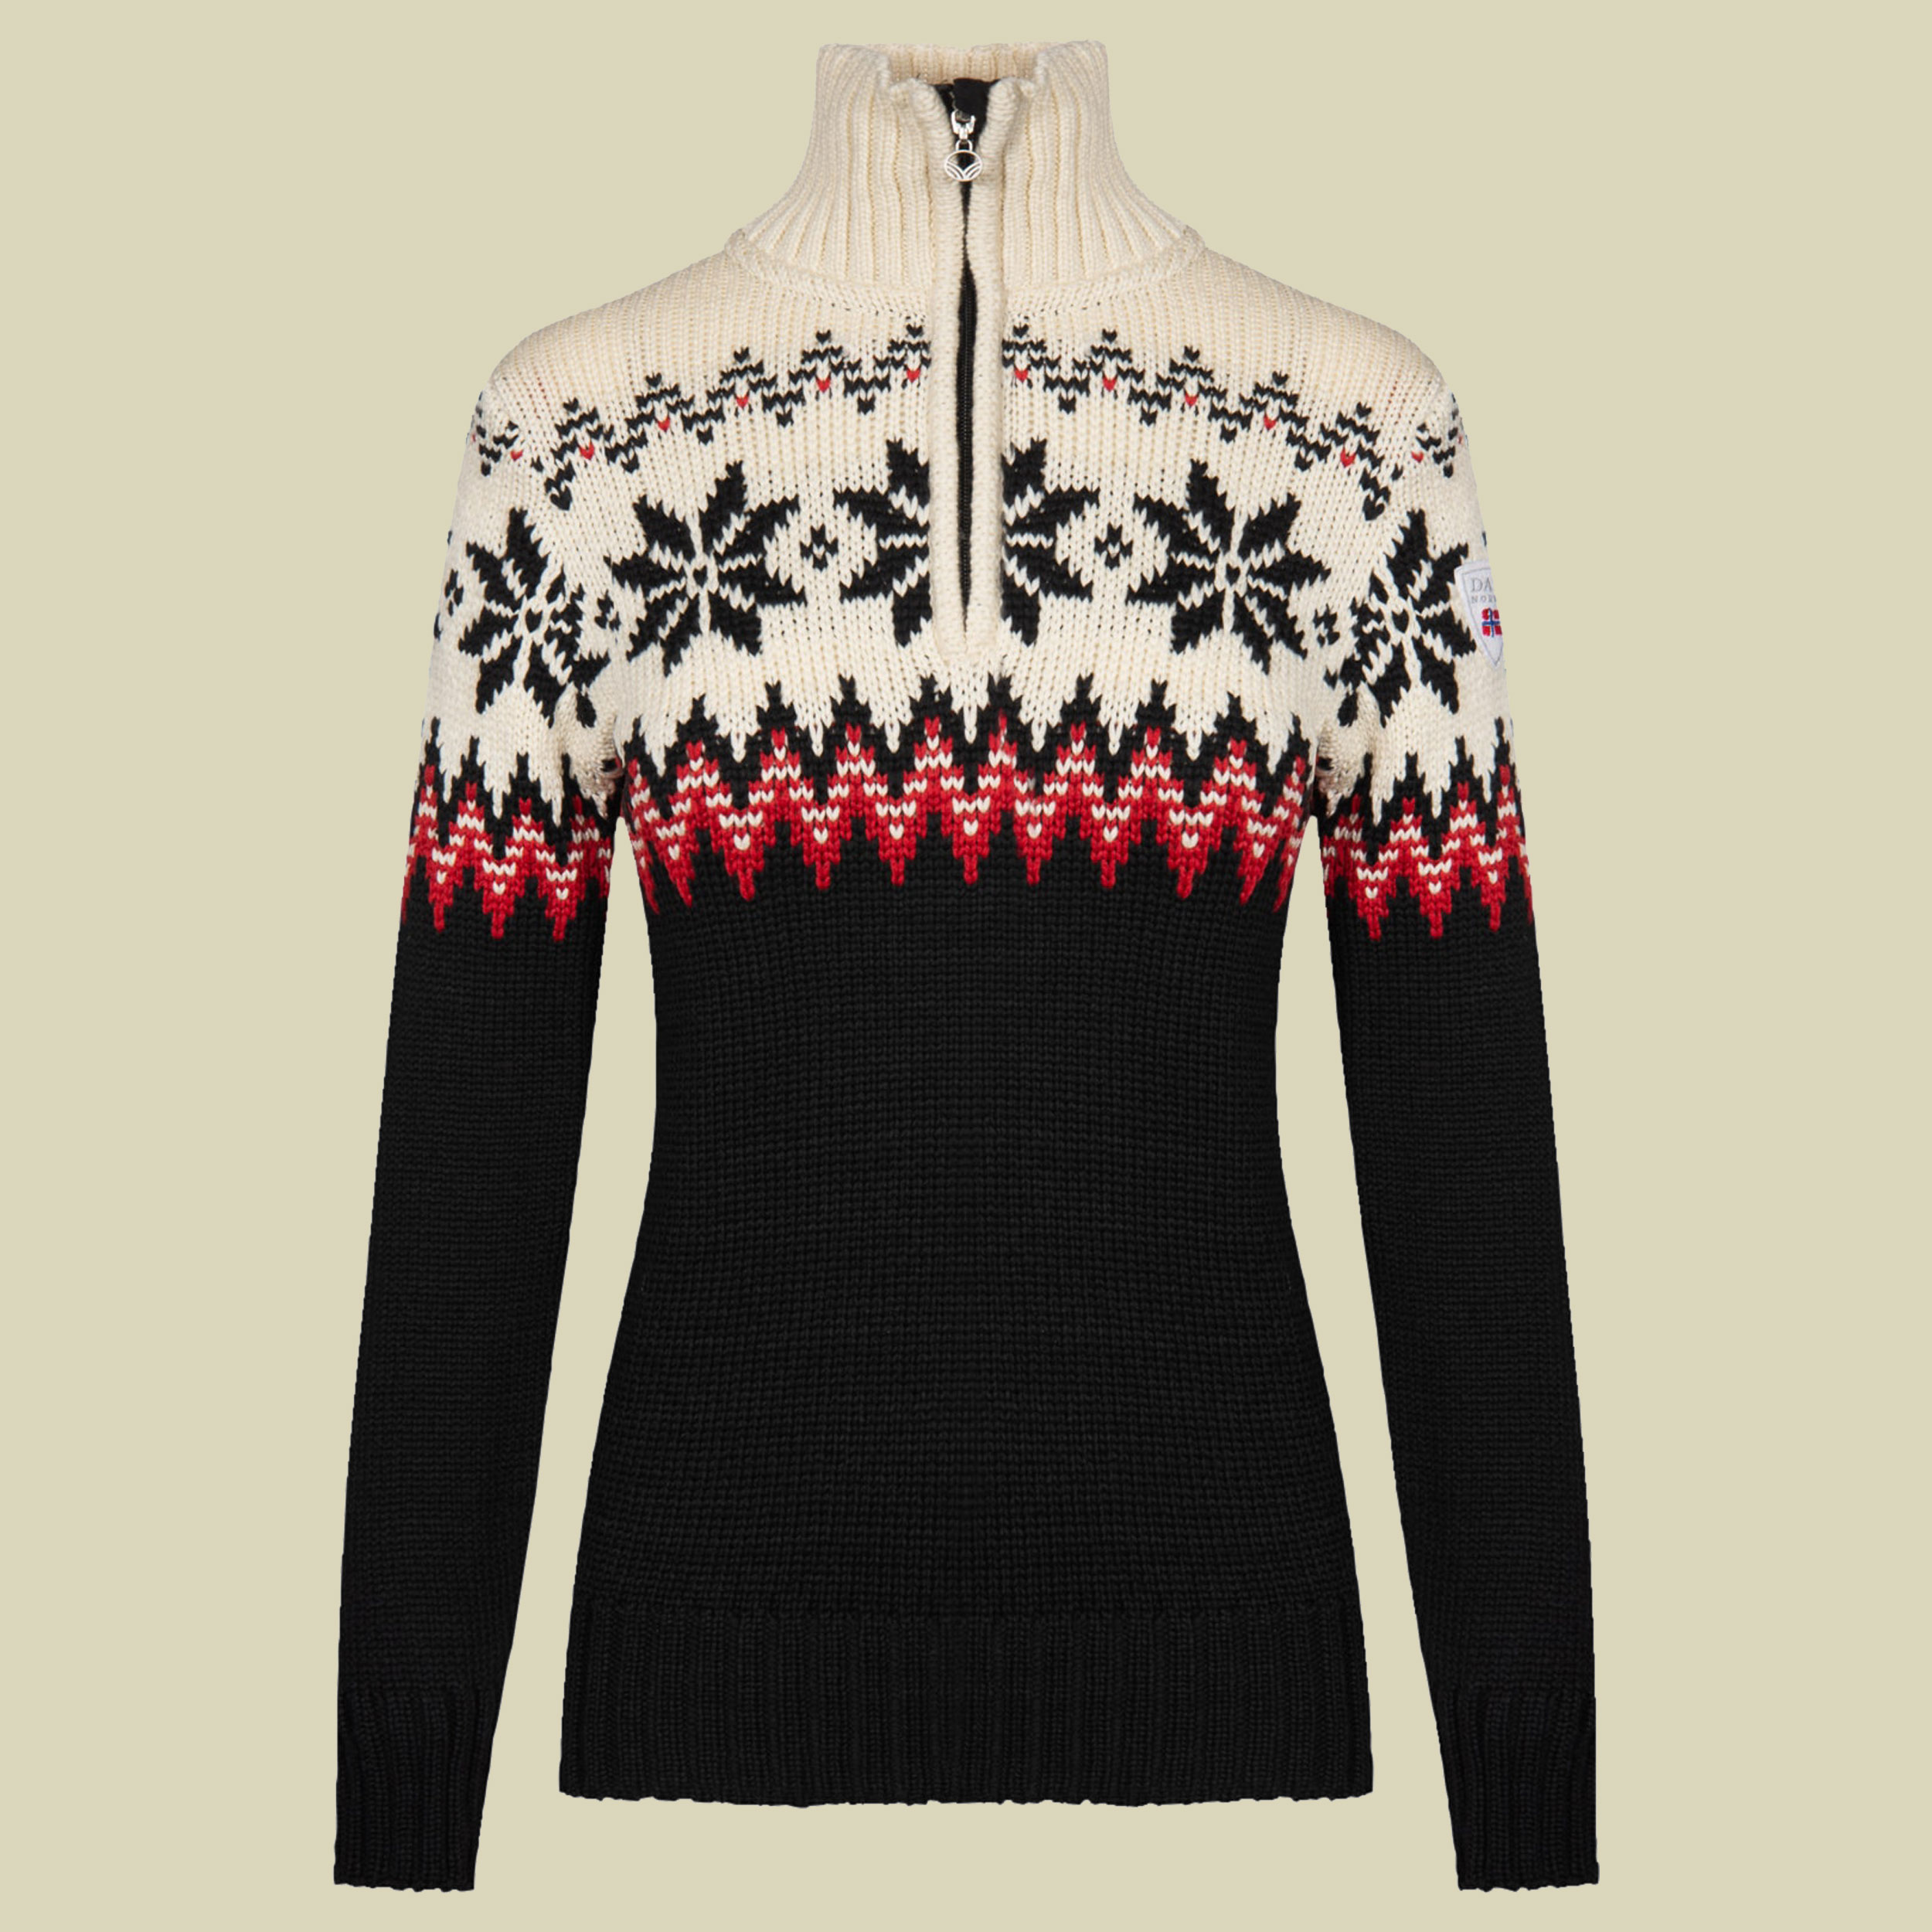 Myking Sweater Women Größe XL Farbe black-raspberry-off white